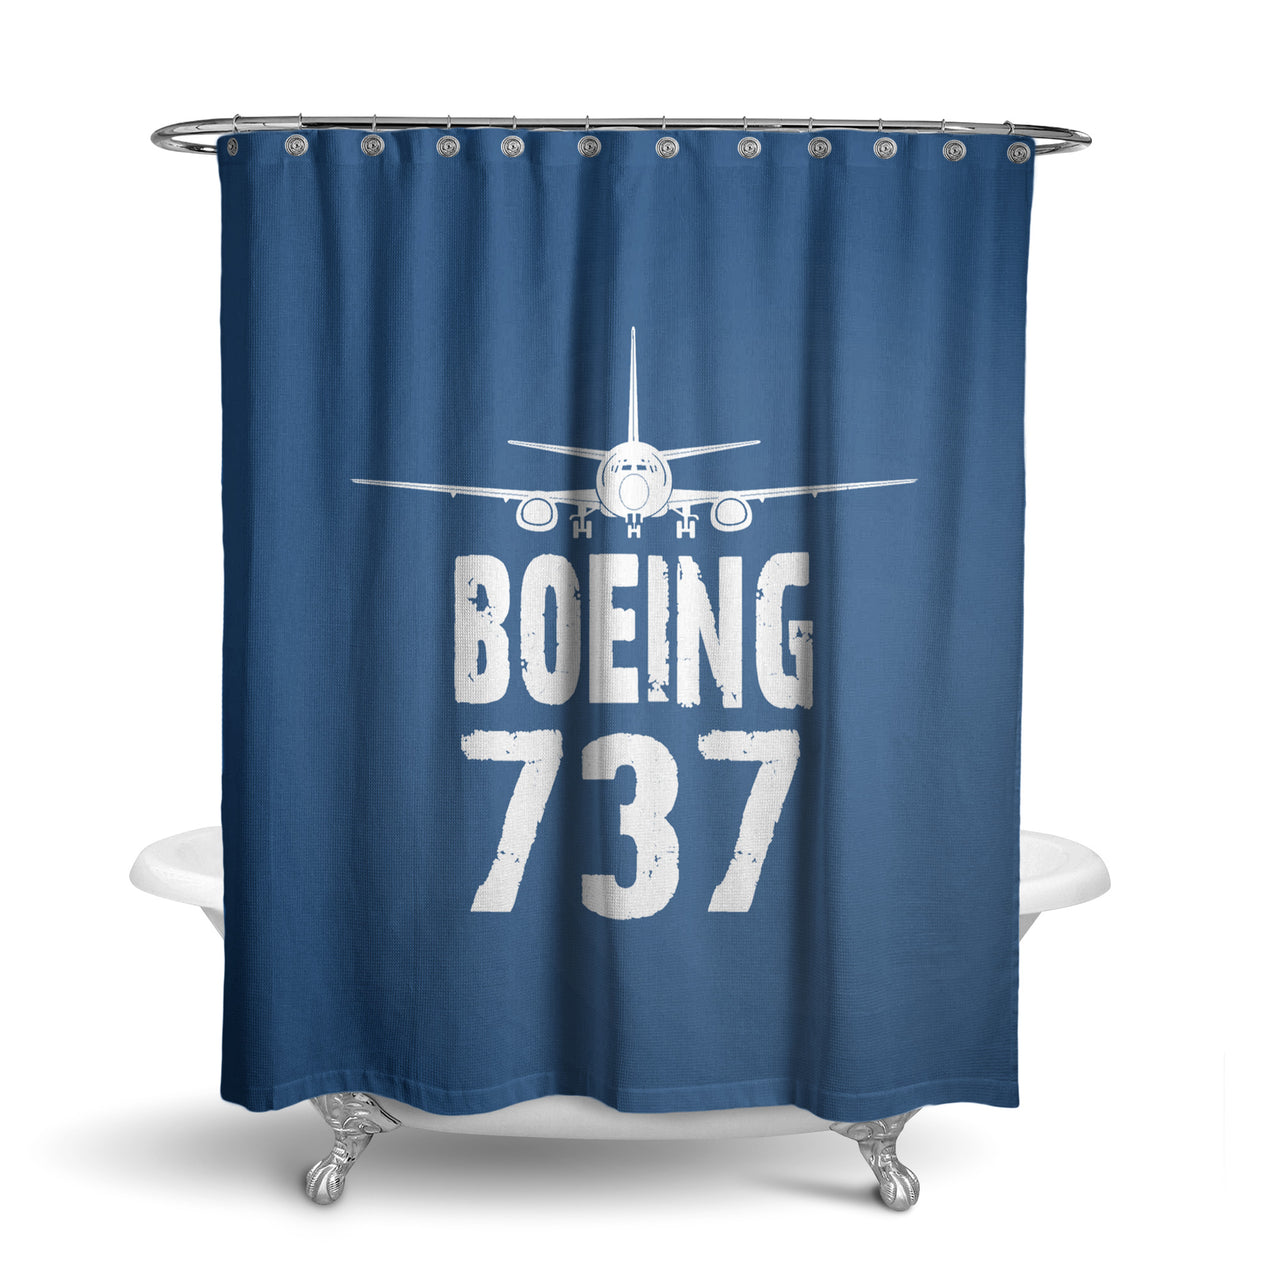 Boeing 737 & Plane Designed Shower Curtains